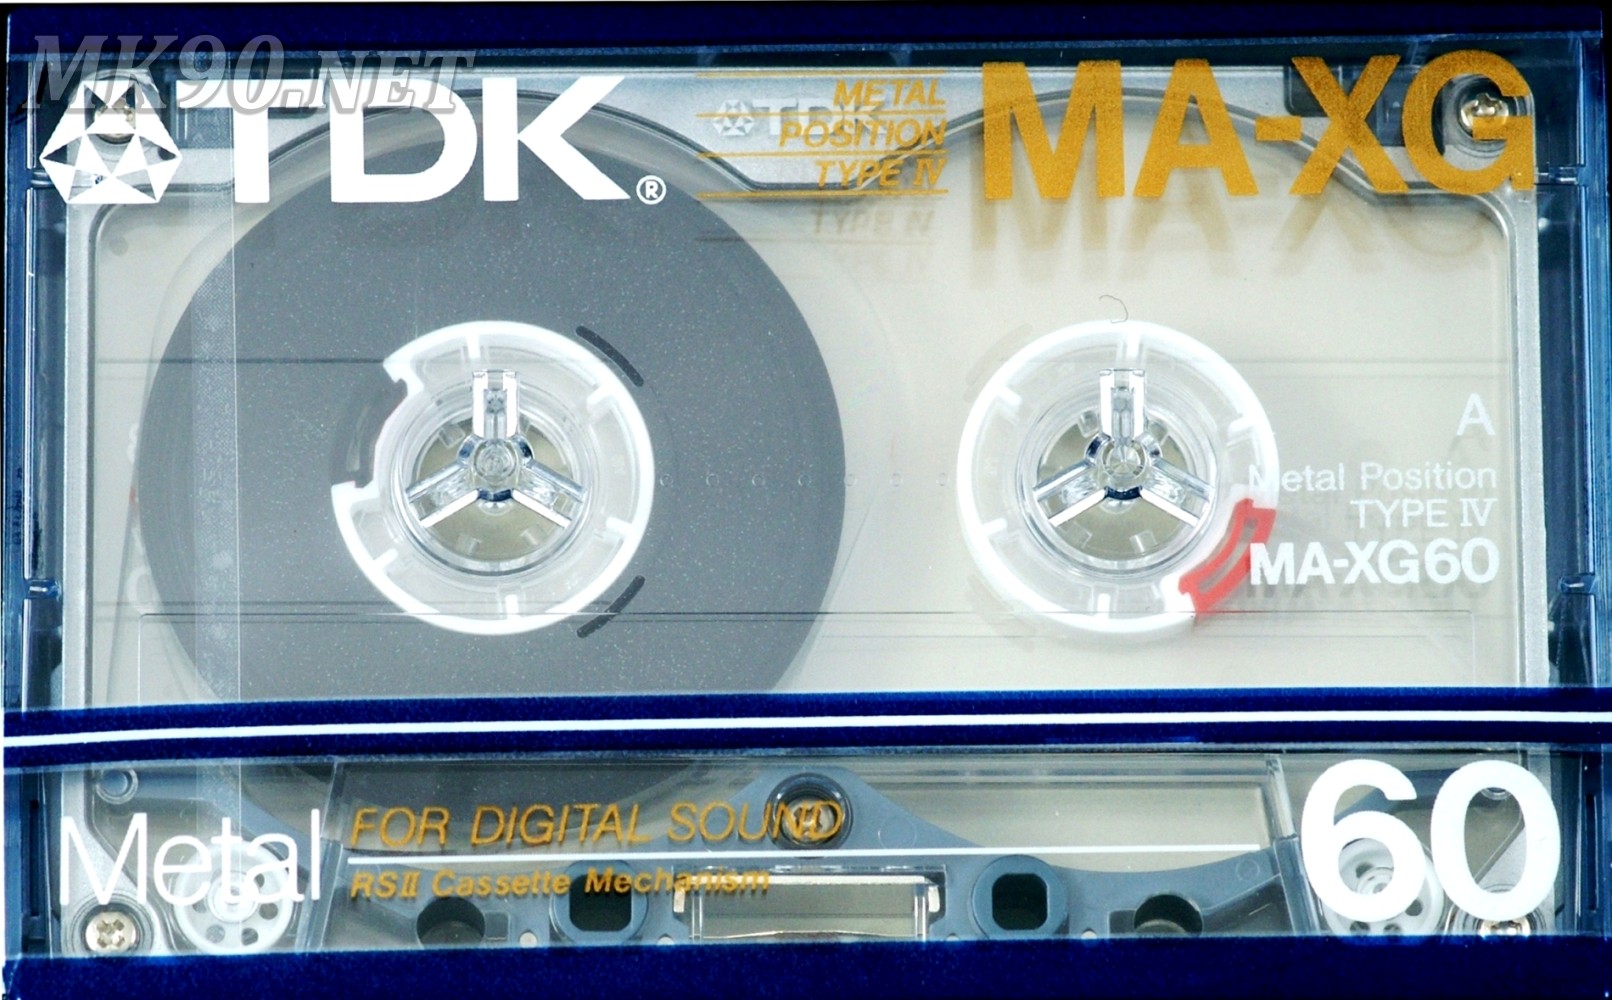 TDK-MA-XG60-1986-88.